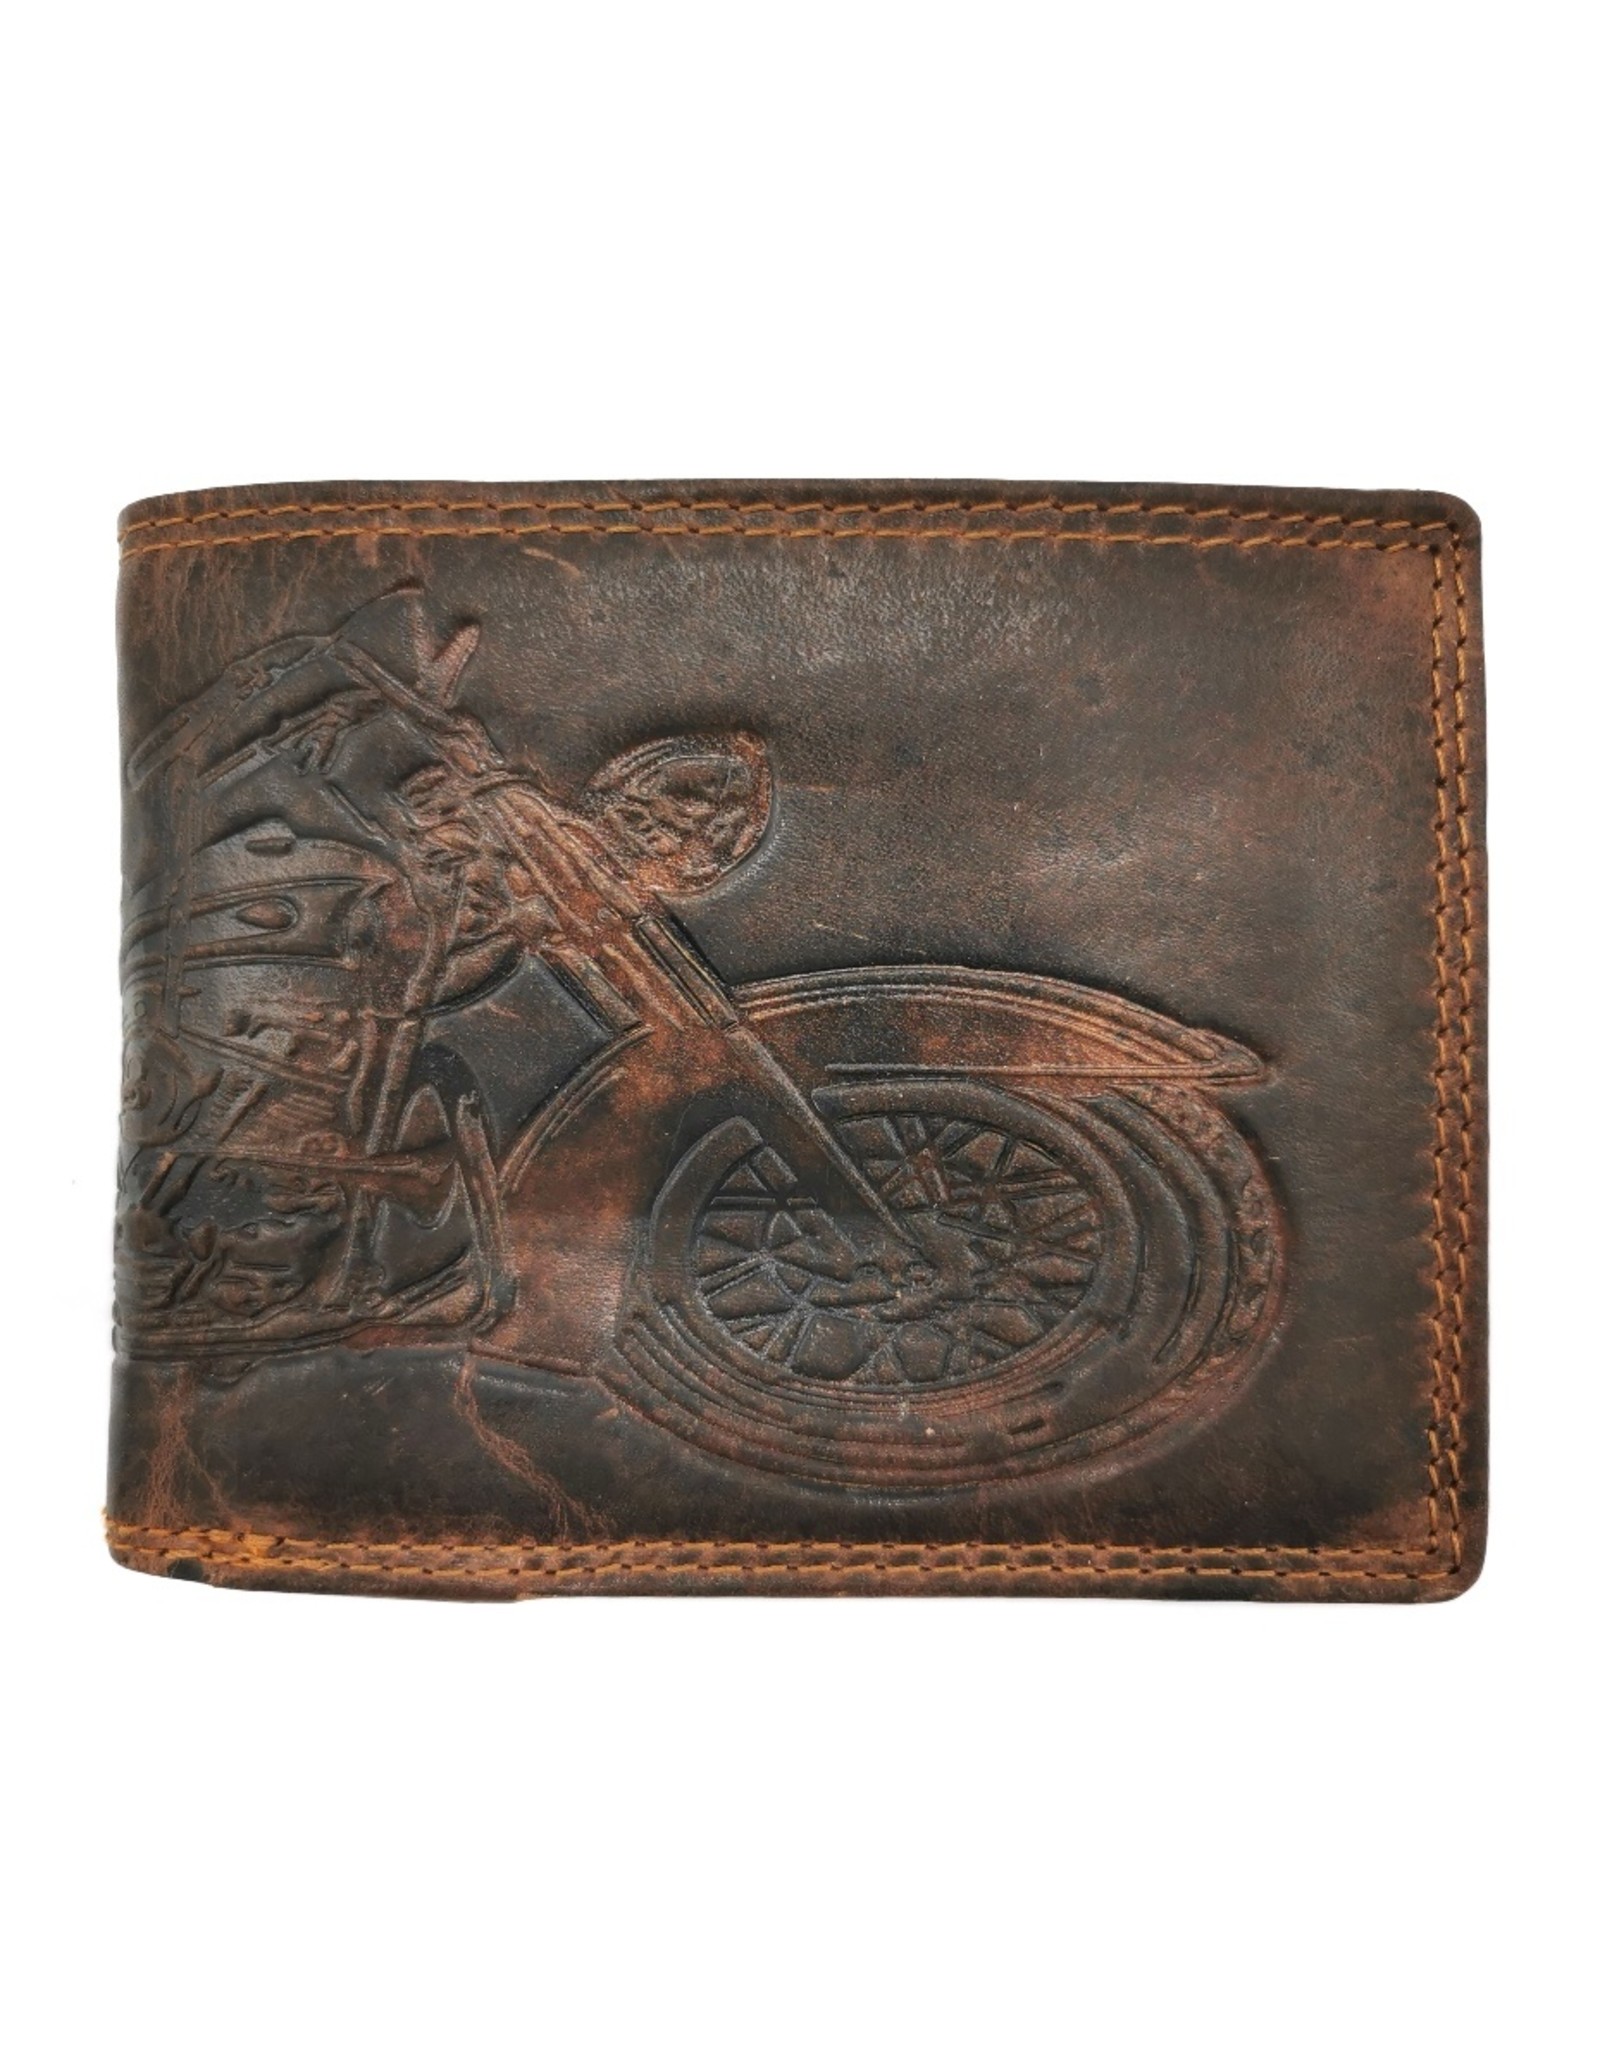 HillBurry Leather Wallets -  Hütmann Leather wallet with embossed motorbike  vintage